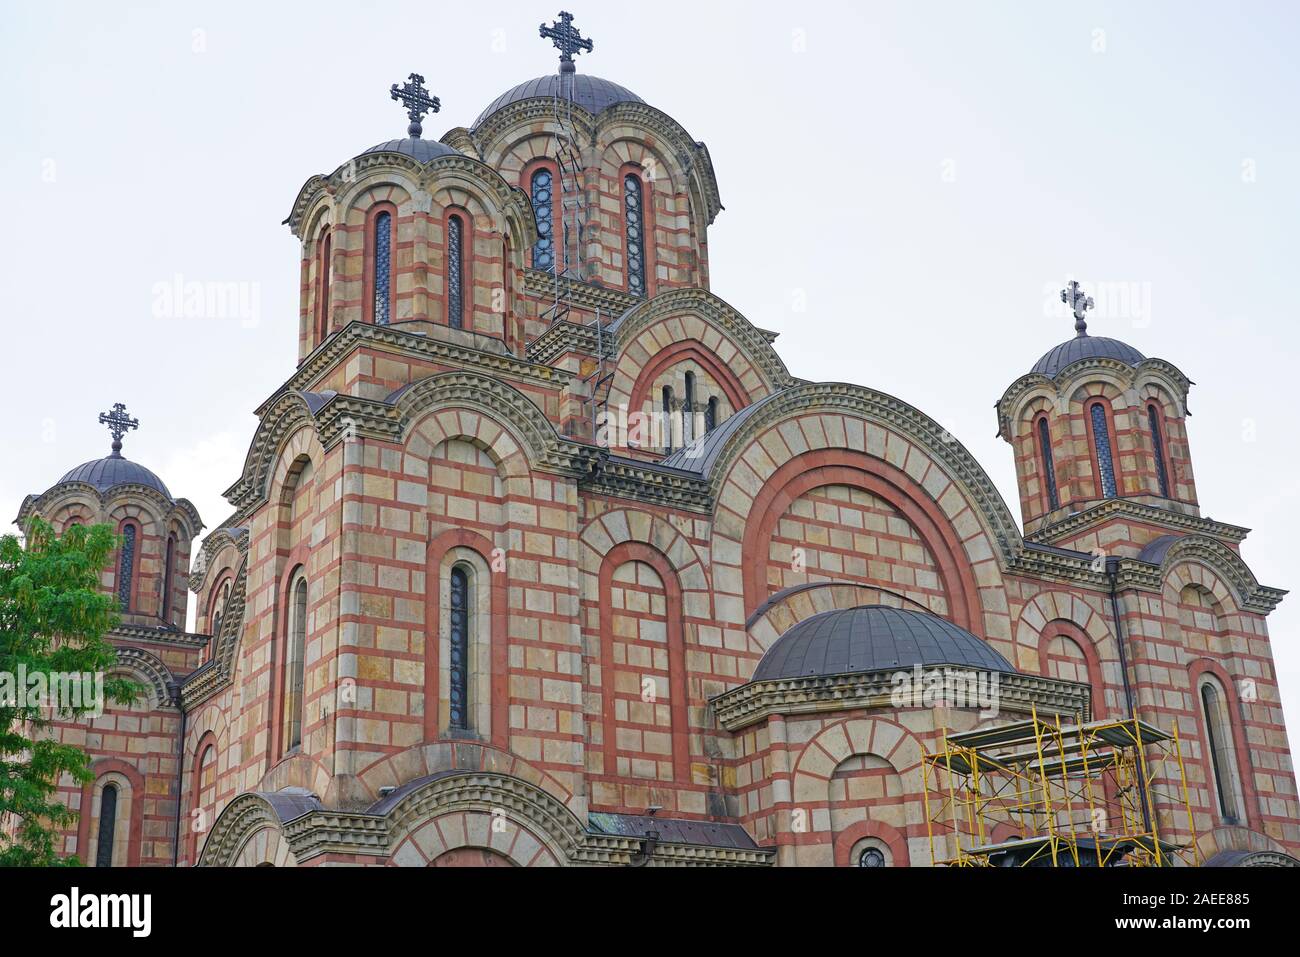 BELGRADE, SERBIA -18 JUN 2019- View of the Church of Saint Mark, a landmark Serbo-Byzantine Serbian Orthodox church located in the Tašmajdan park in B Stock Photo